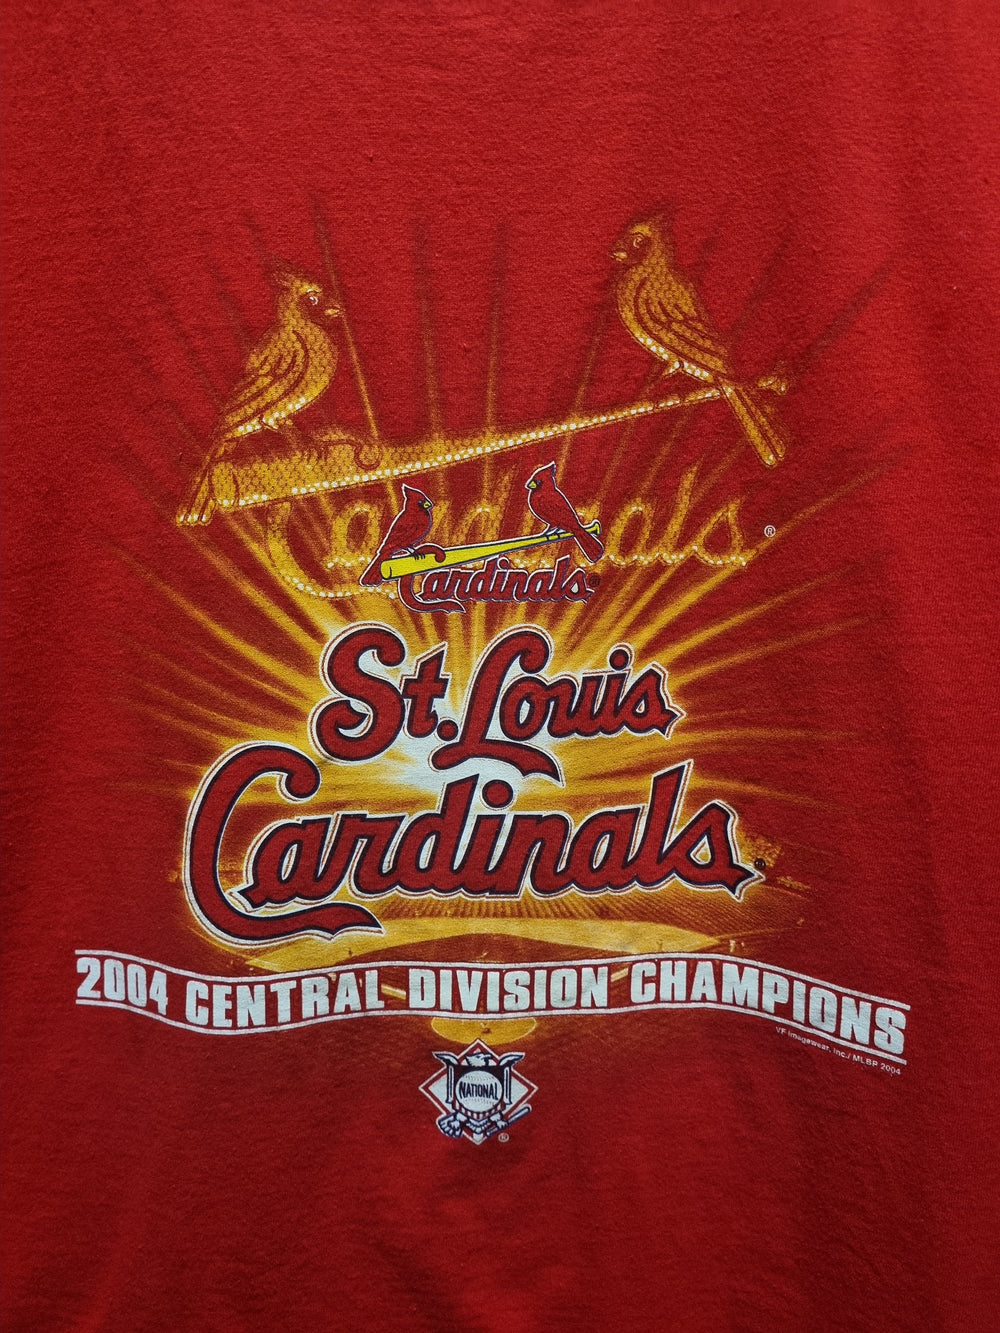 St Louis Cardinals 2004 Central Division Champs Medium